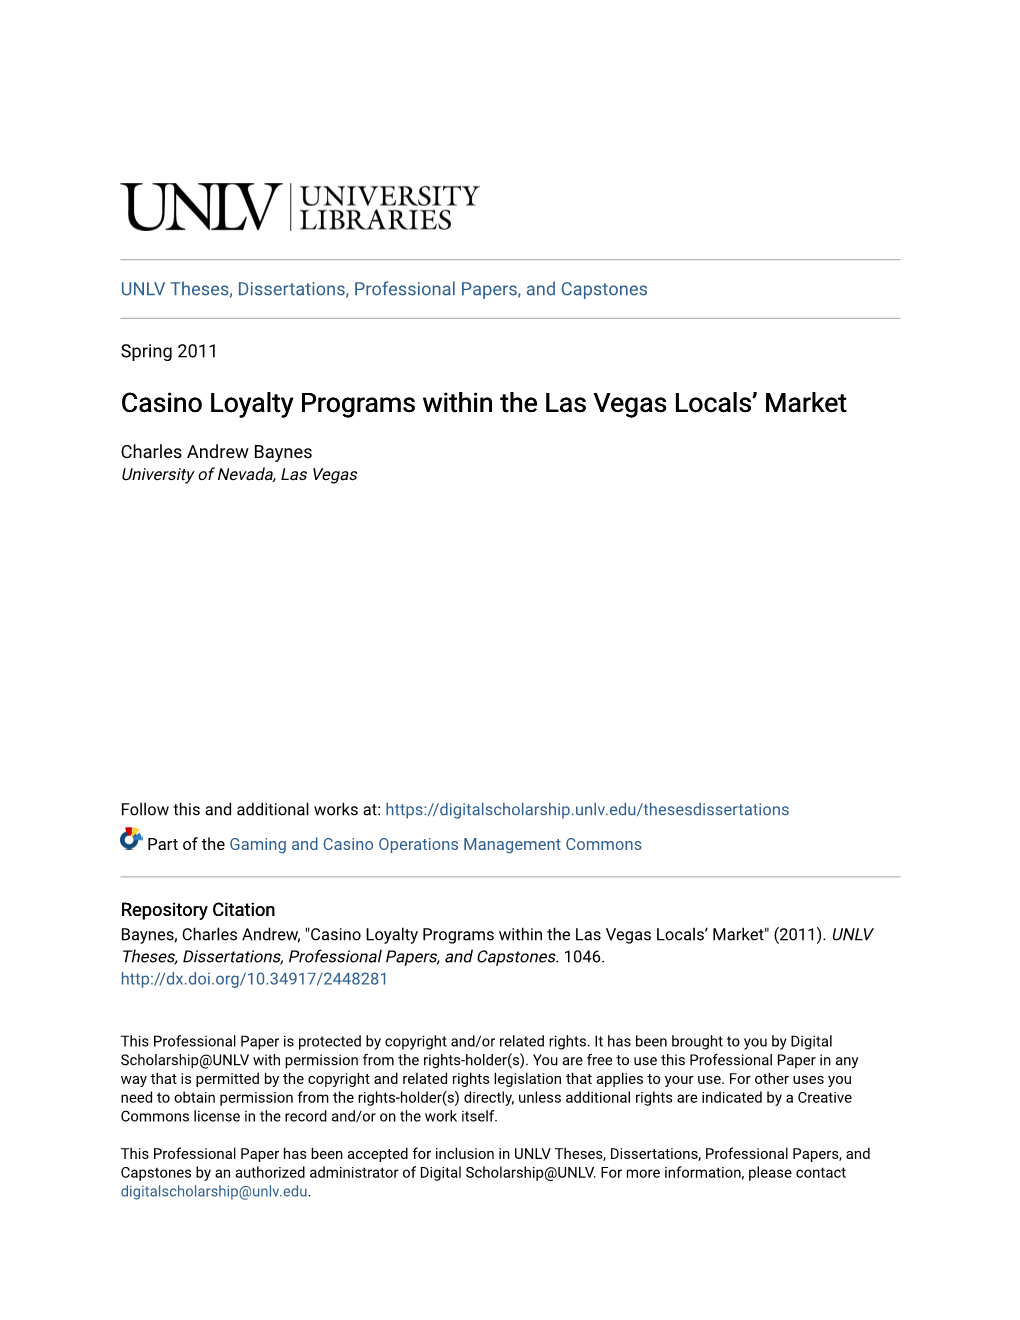 Casino Loyalty Programs Within the Las Vegas Locals' Market